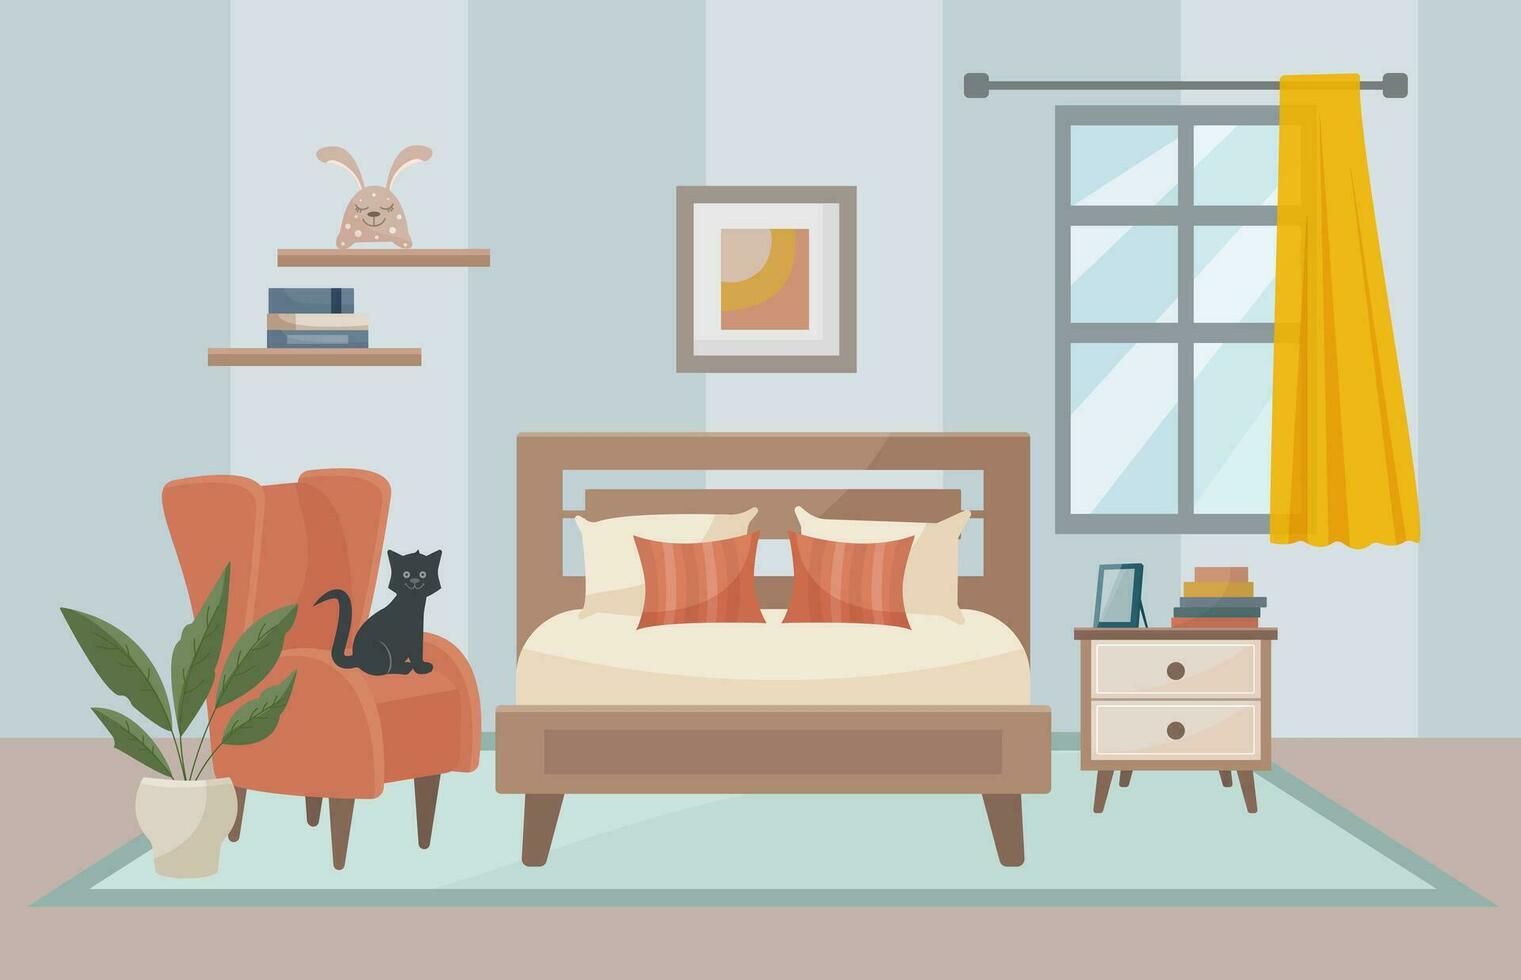 dormitorio interior sillón, cama, cabecera mesa, foto marco, estantes, libros, suave juguete. interior concepto. negro gato en un silla. vector plano ilustración.